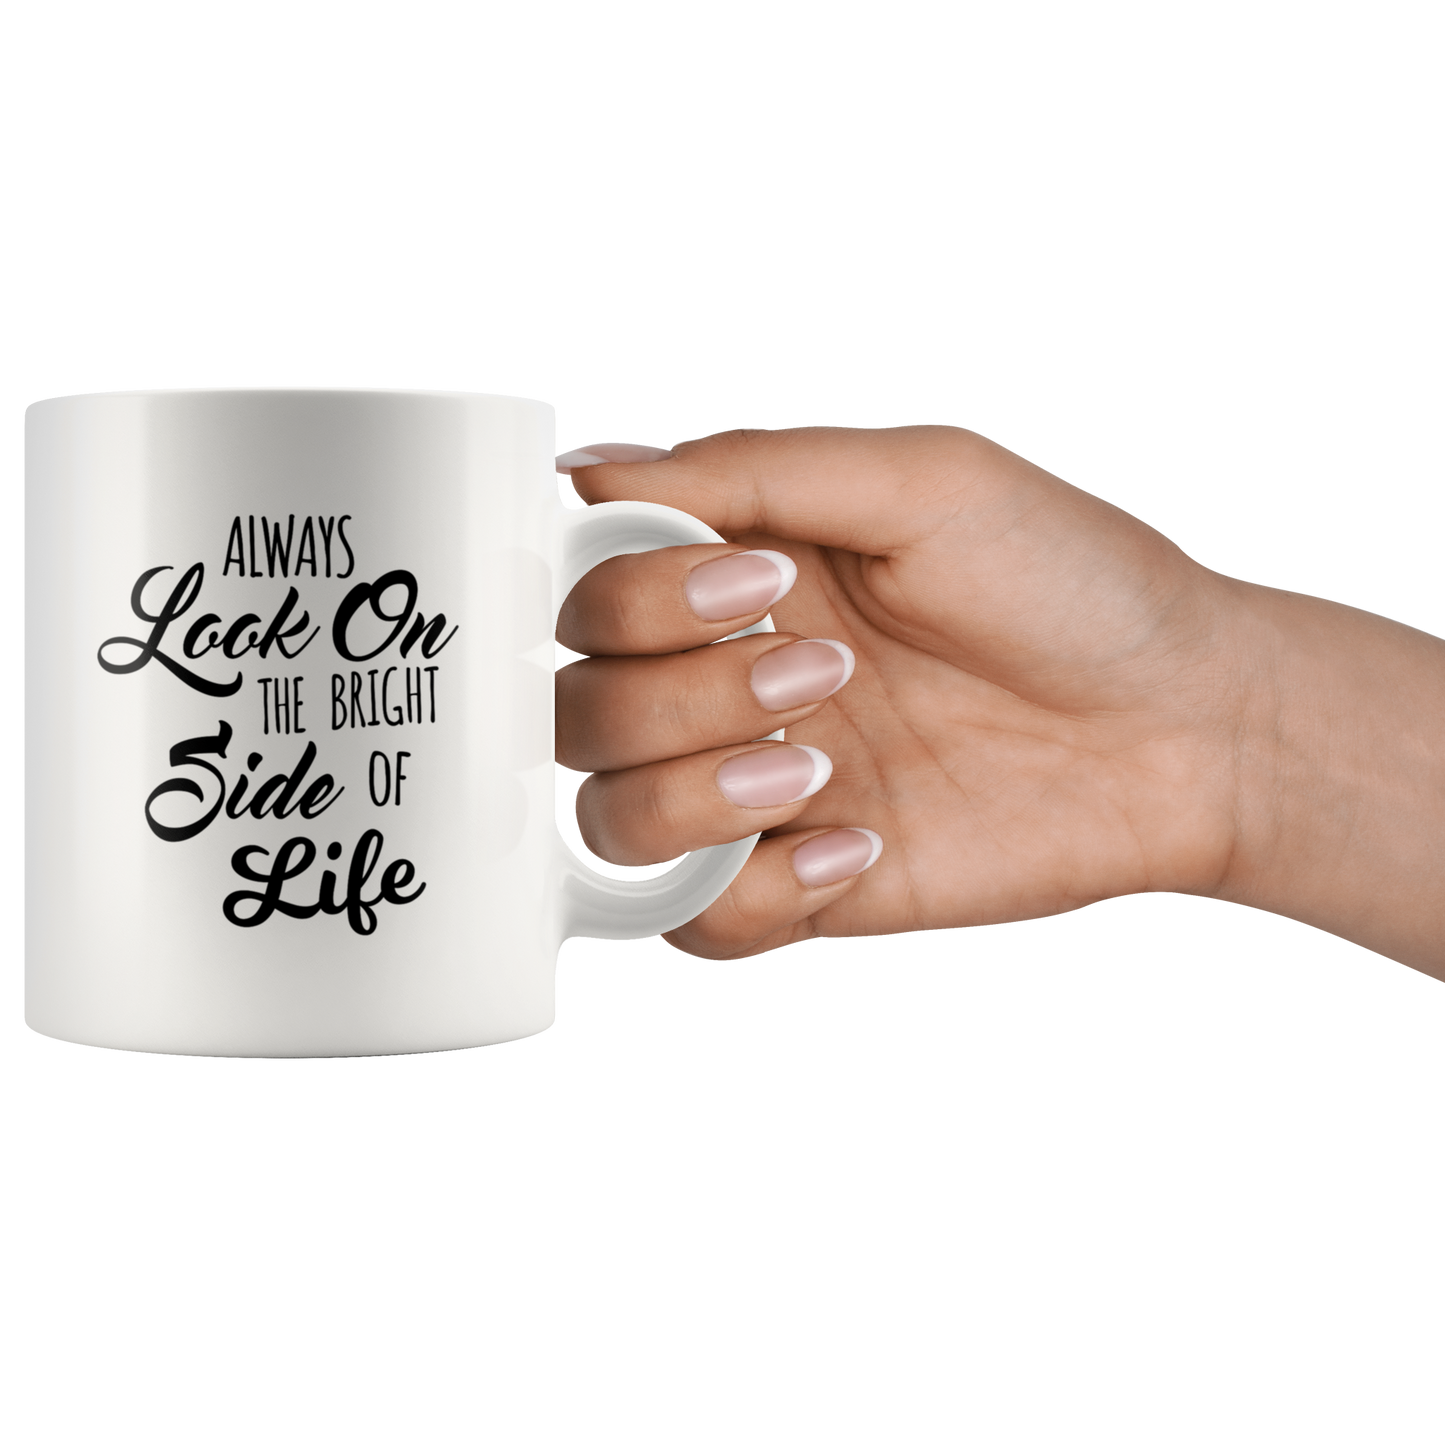 Motivational Coffee Mug Look on the Bright Side of Life Inspirational Coffee Mug Gift